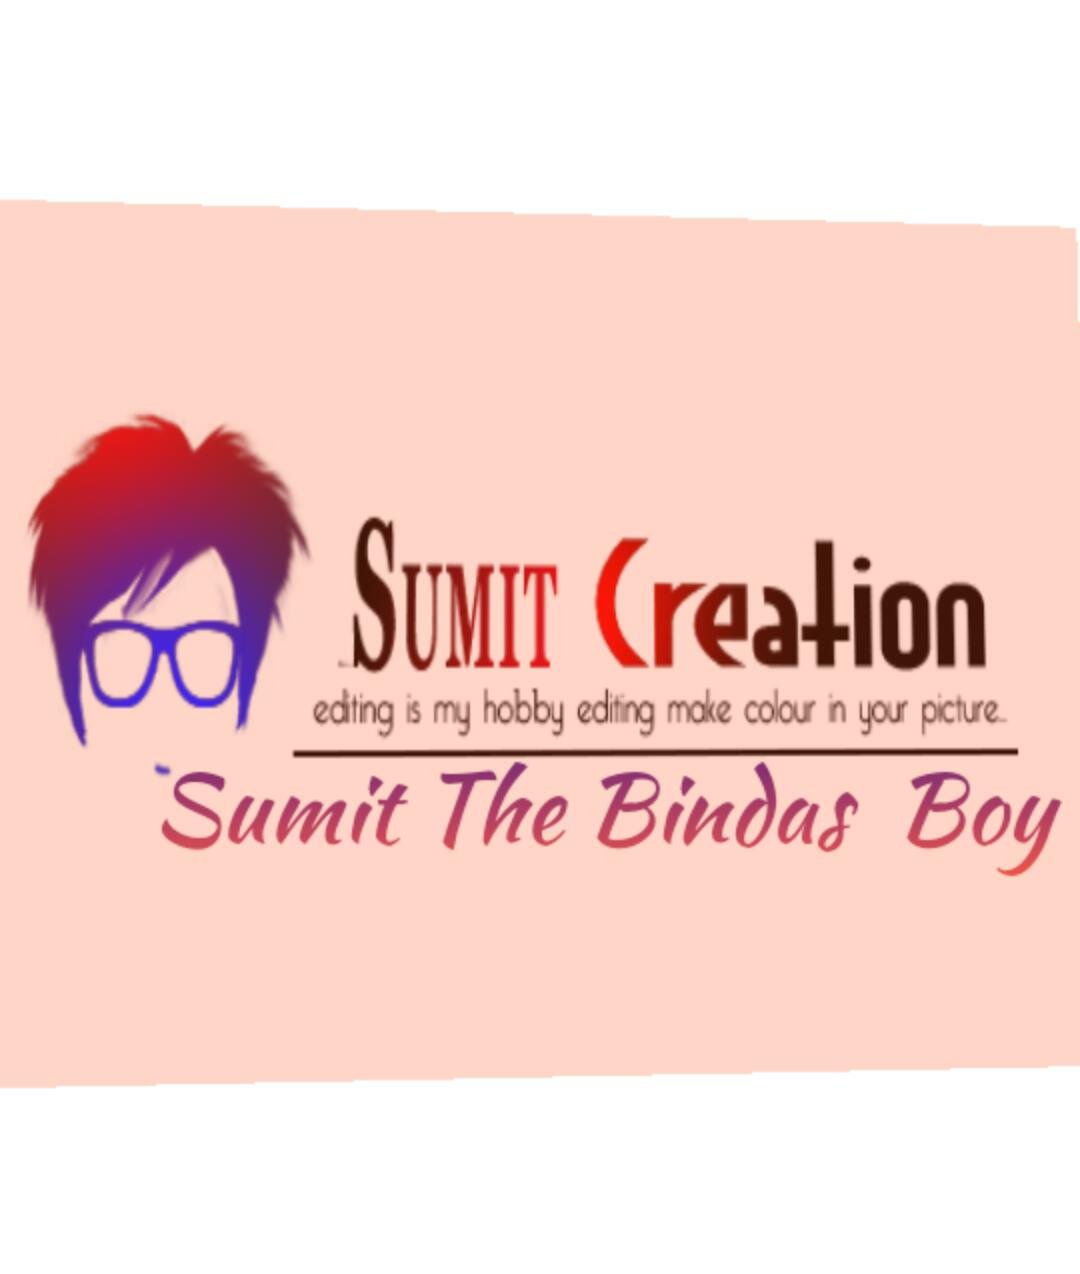 Share more than 91 sumit edit logo latest